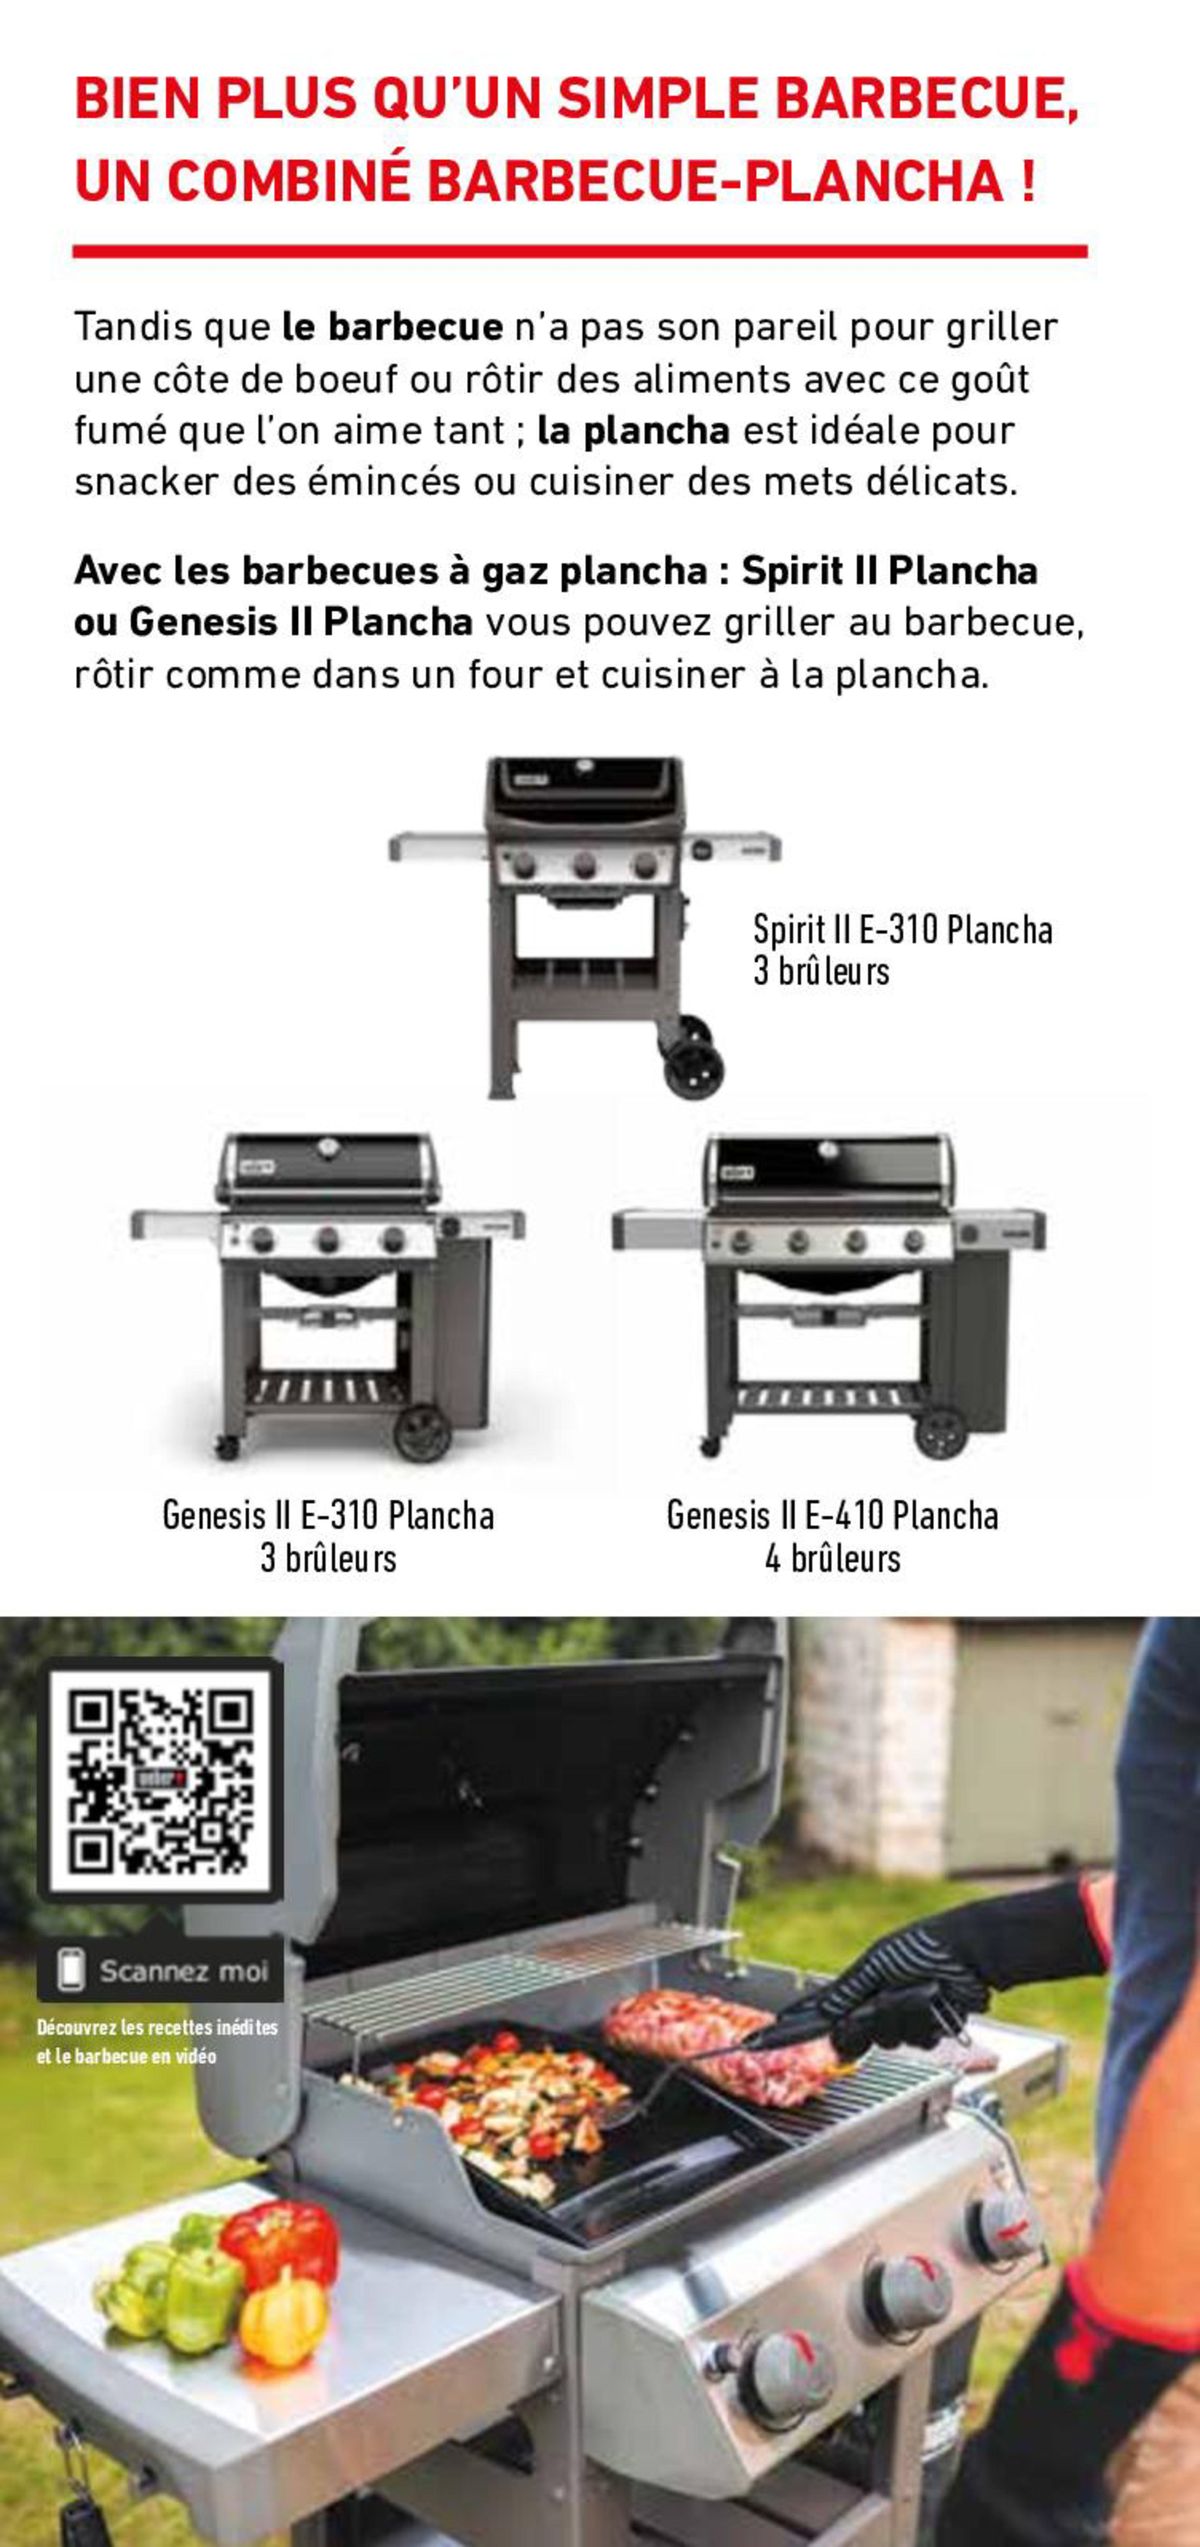 Catalogue Le combine barbecue-plancha !, page 00002